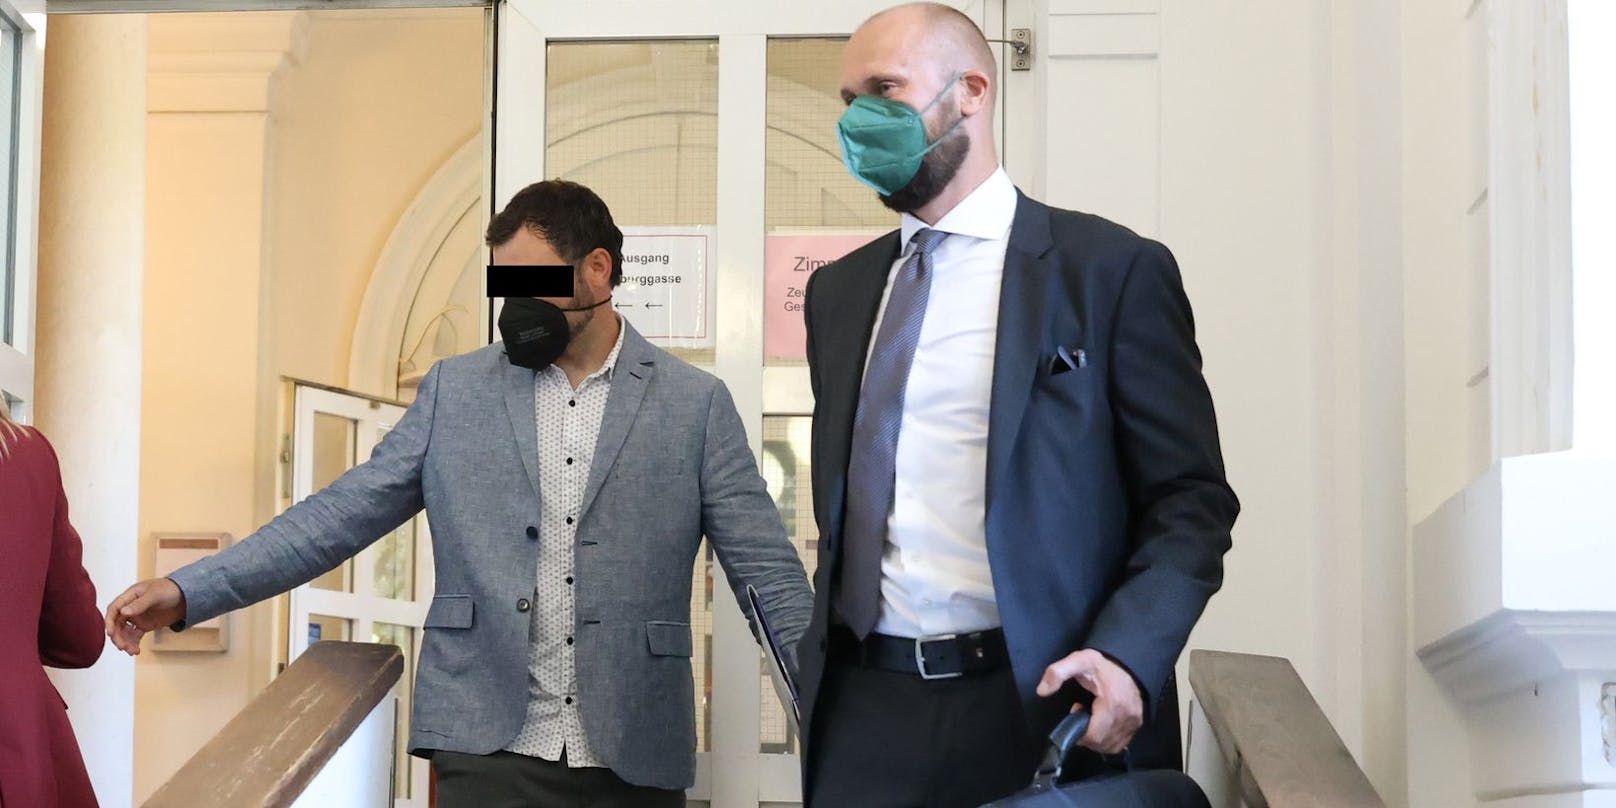 Turpal I. (33) kam im Sakko, rechts sein Anwalt Florian Kreiner.